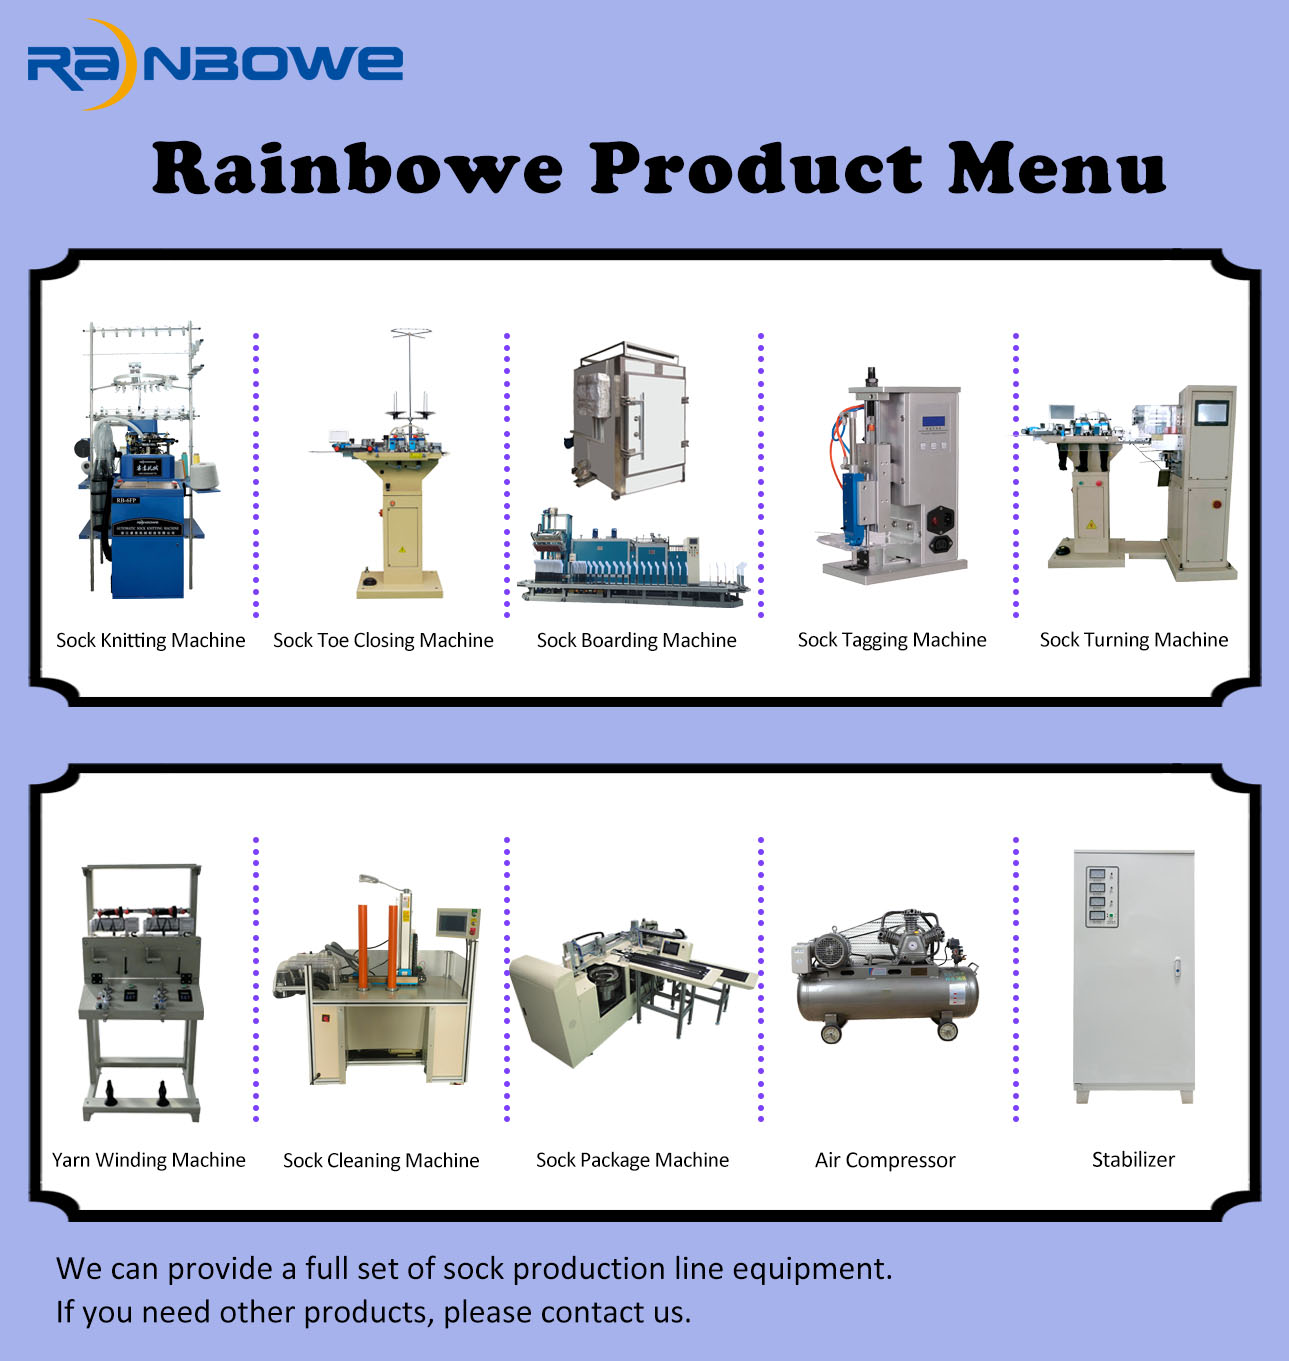 Rainbowe–One-stop service provider